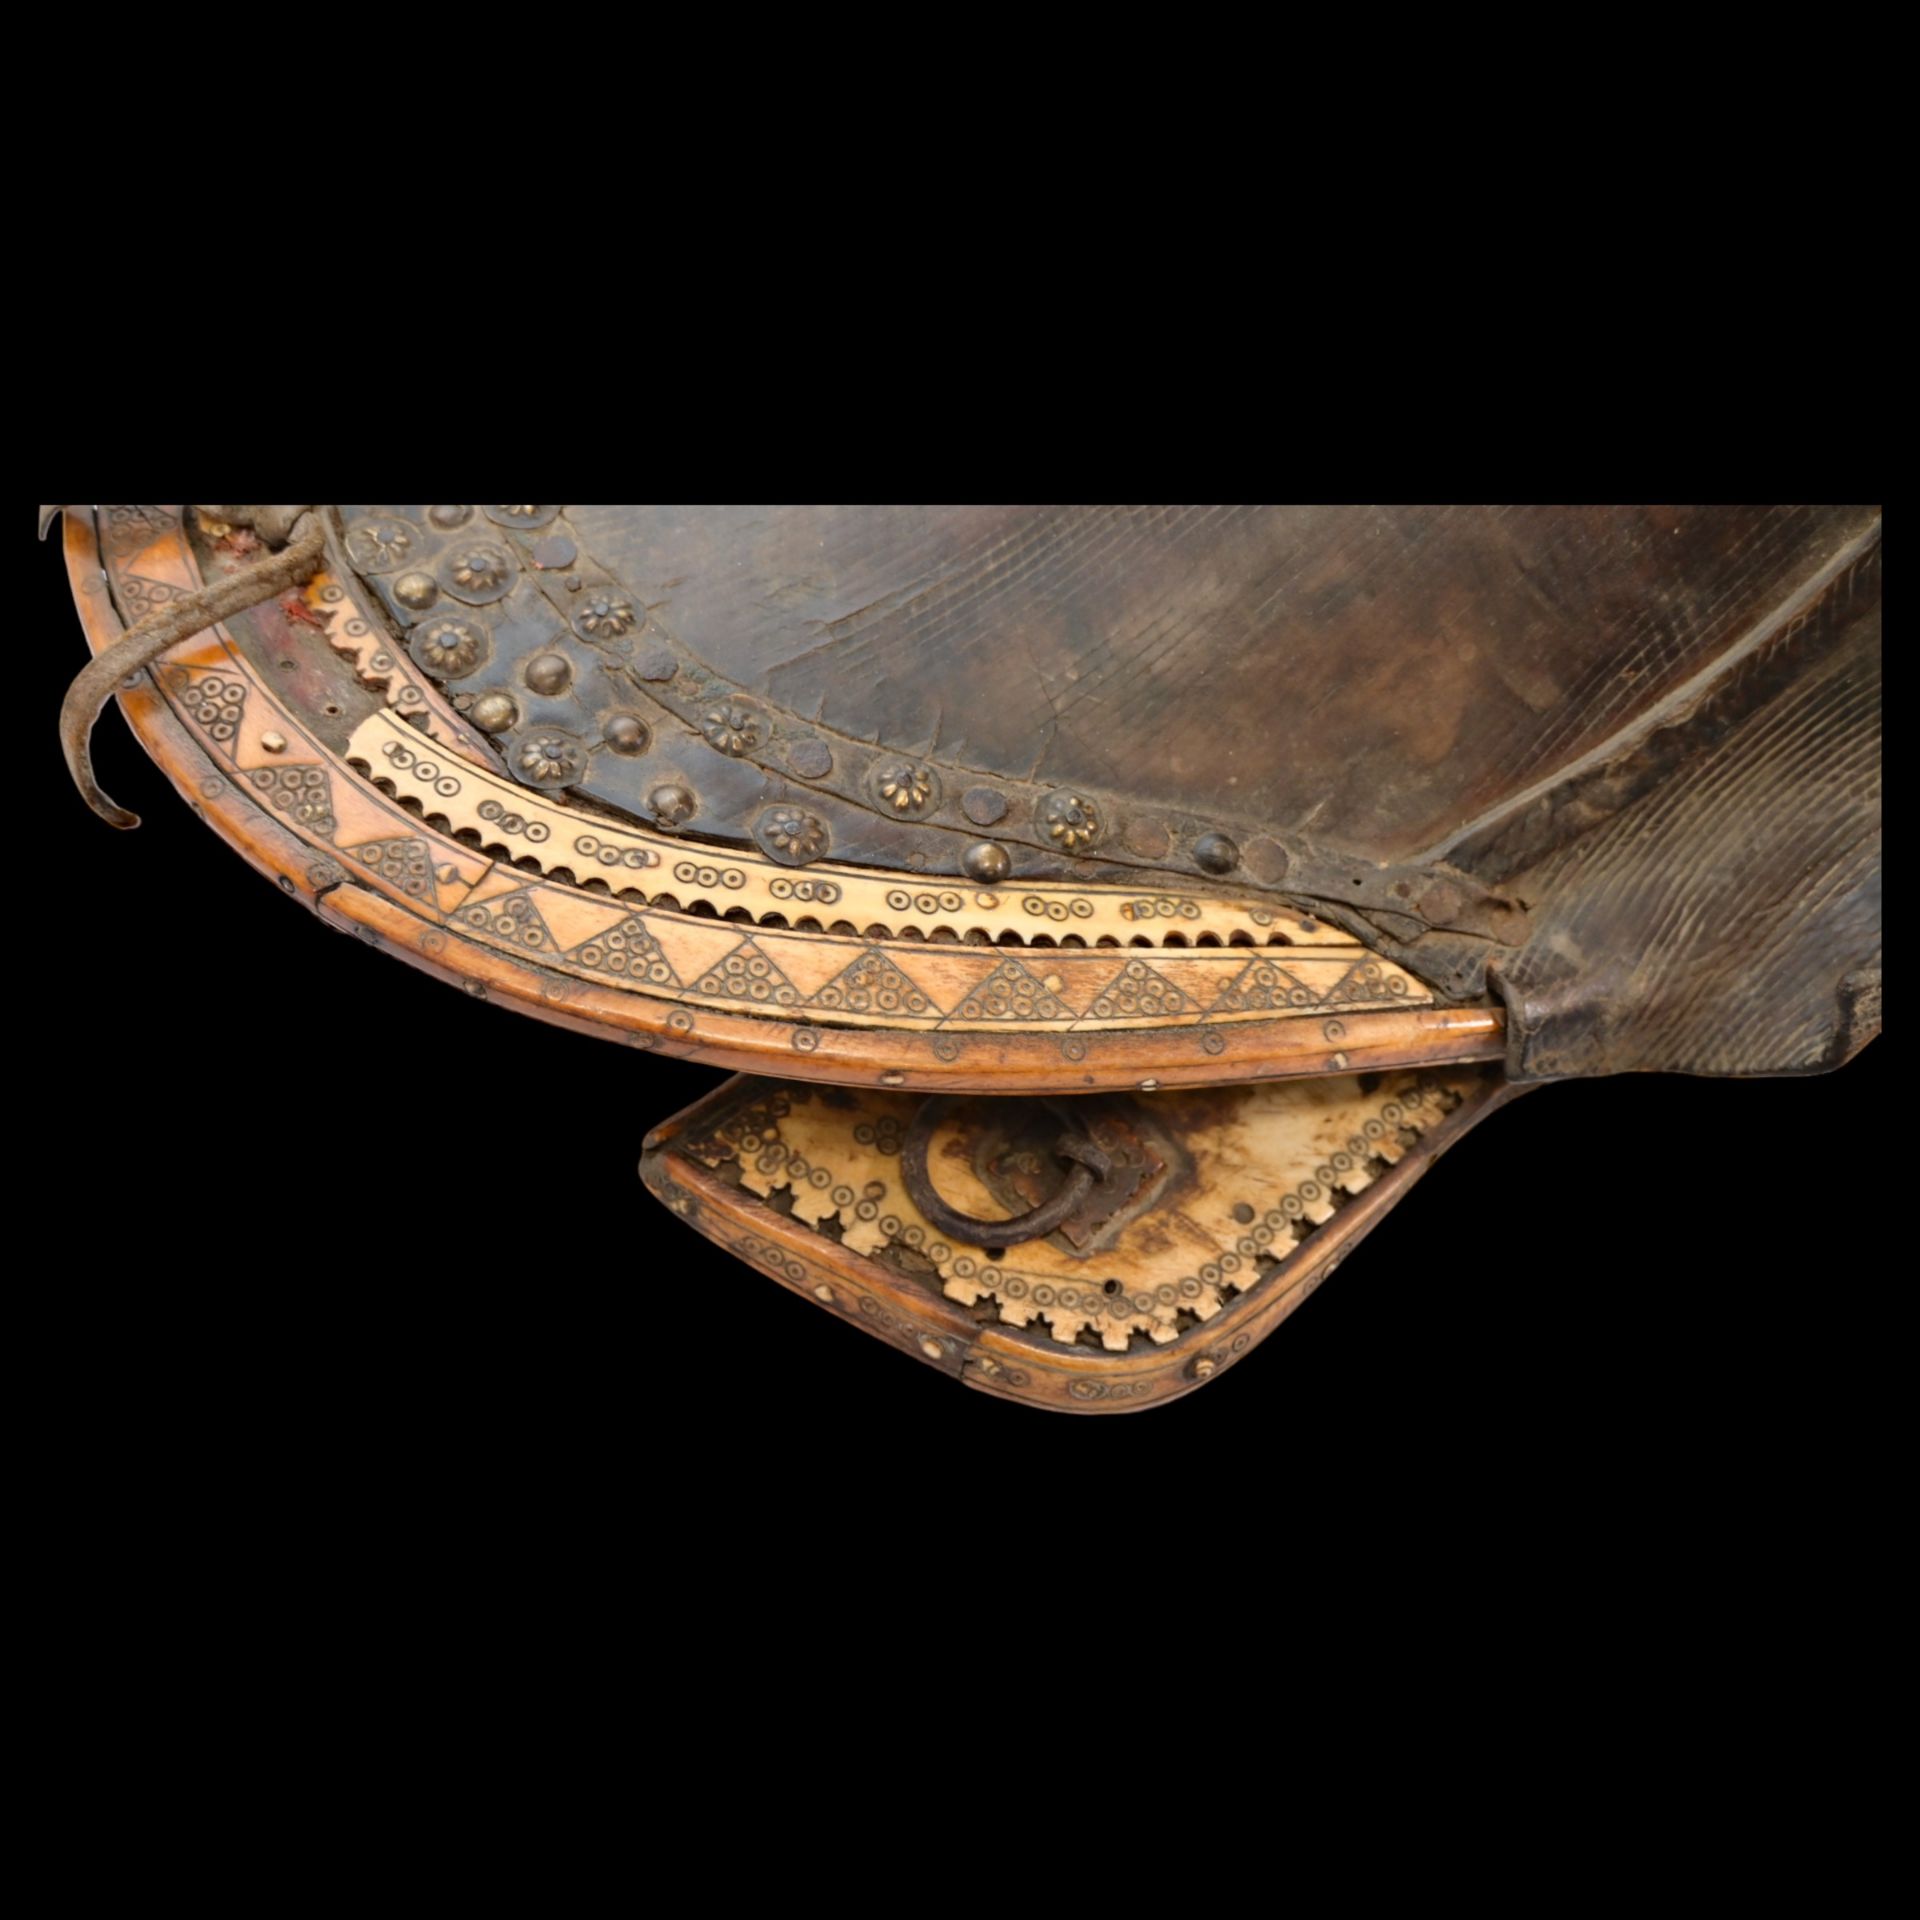 Rare antique Islamic Ottoman, Persian or Central Asia saddle for horseback, 18th century. - Image 5 of 12